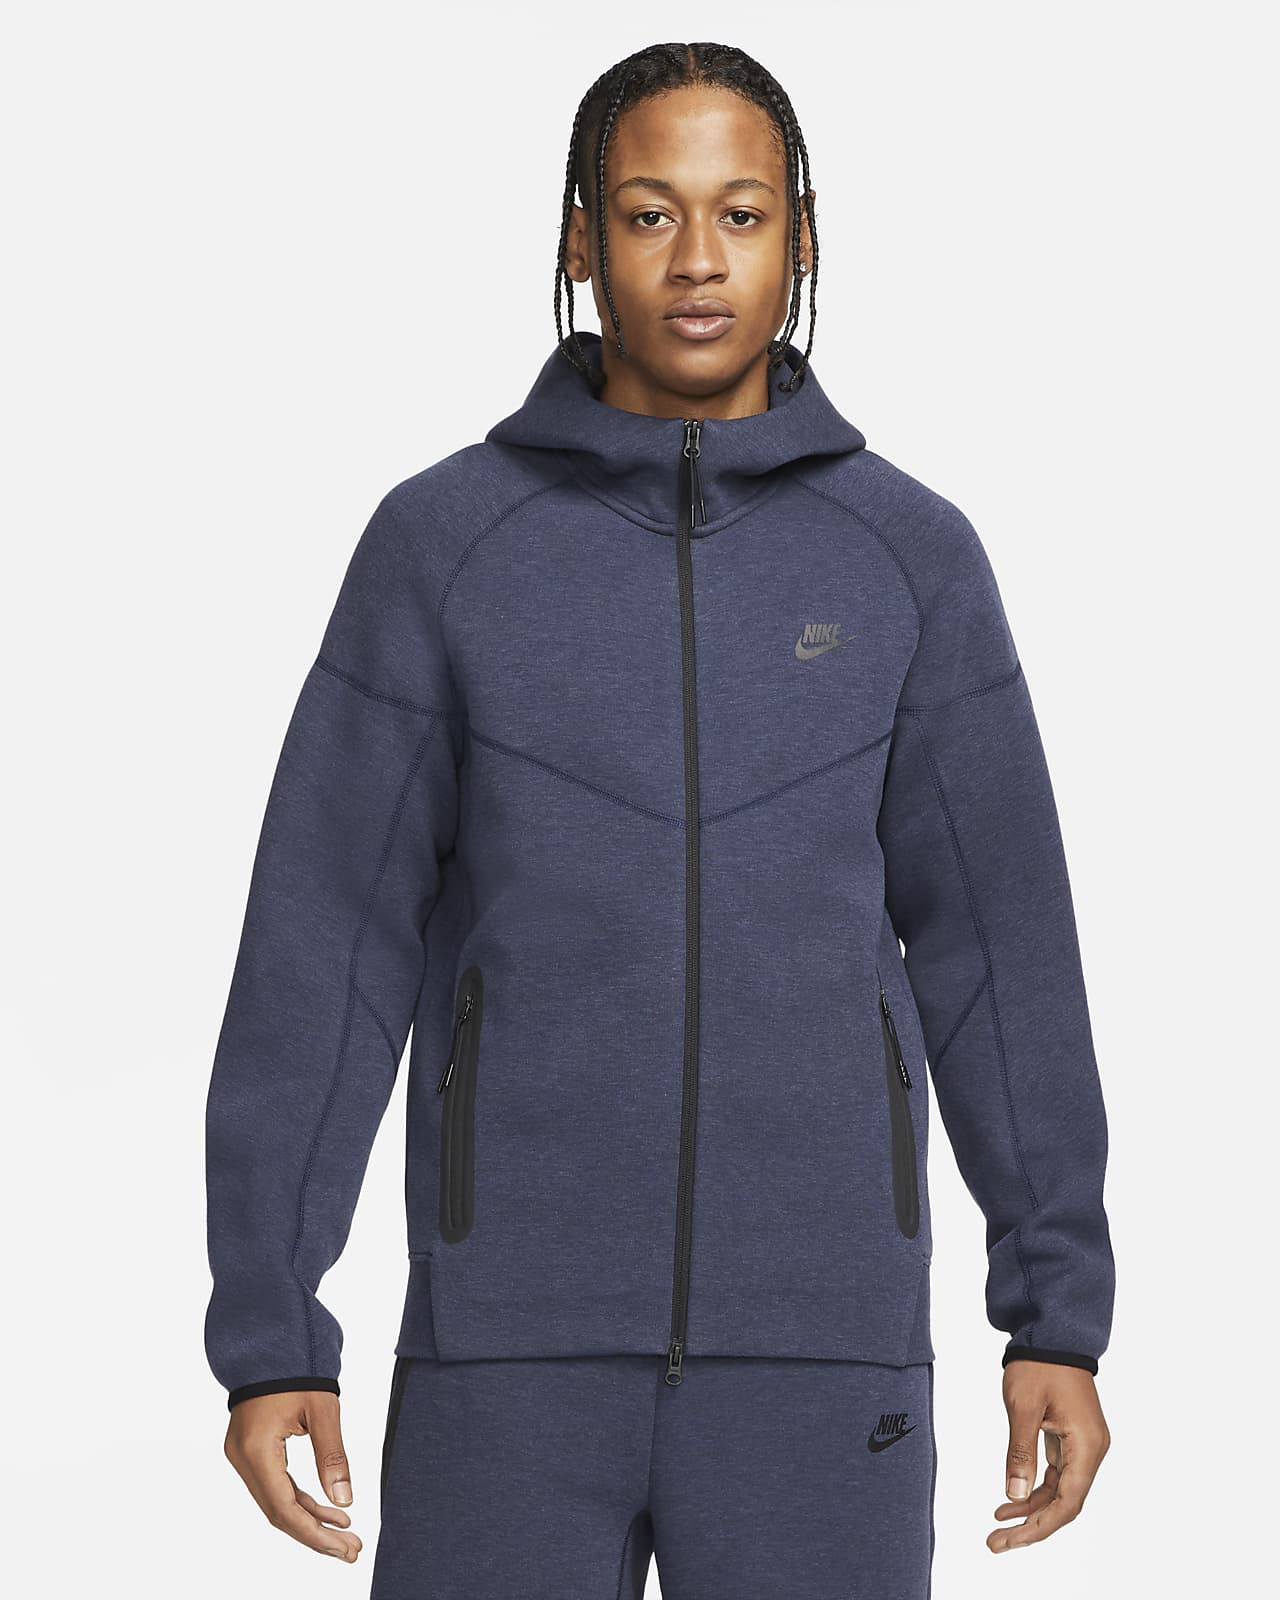 Nike Sportswear Tech Fleece Windrunner Sudadera con capucha con cremallera completa - Hombre